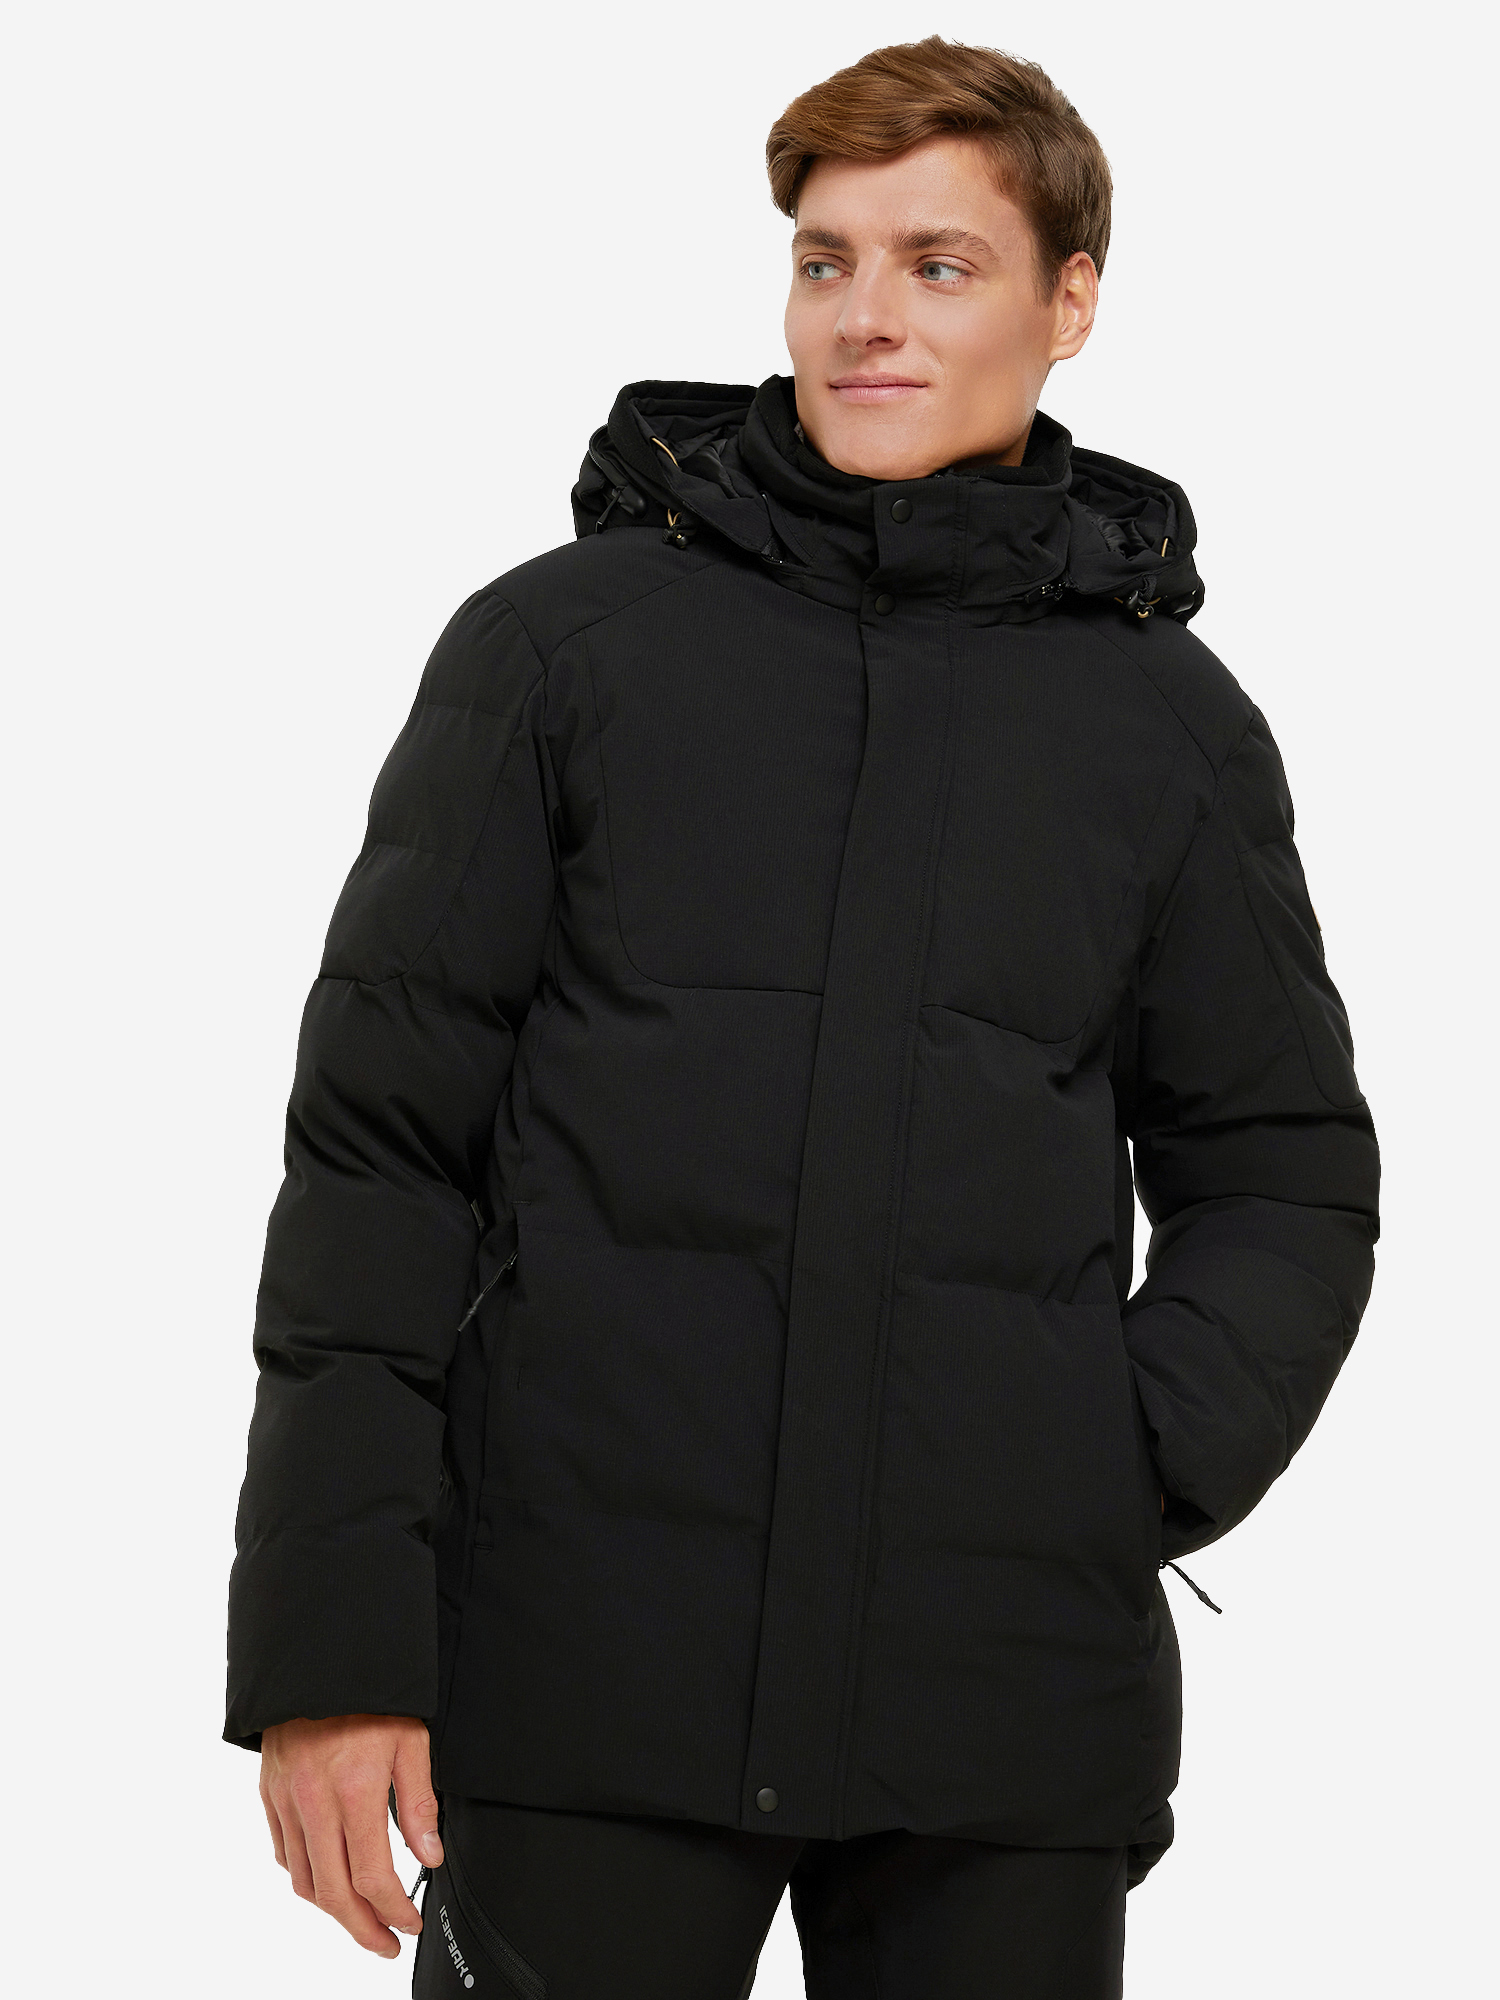 Куртка утепленная мужская IcePeak Bixby, Черный куртка утепленная мужская icepeak albers